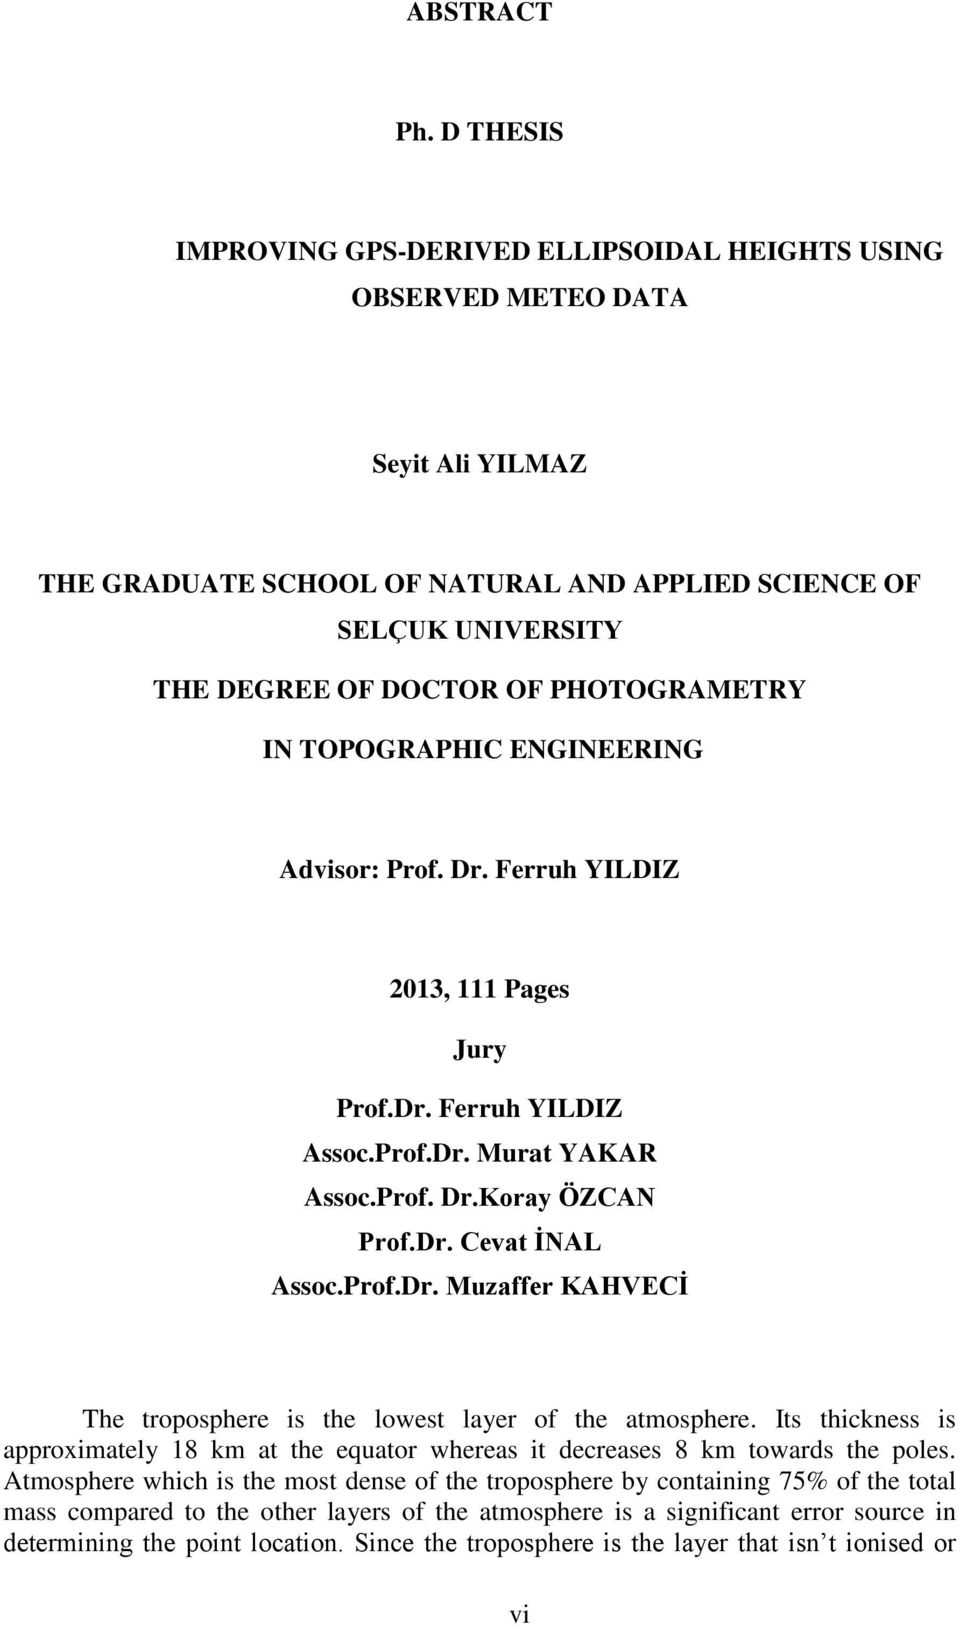 PHOTOGRAMETRY IN TOPOGRAPHIC ENGINEERING Advisor: Prof. Dr. Ferruh YILDIZ 13, 111 Pages Jury Prof.Dr. Ferruh YILDIZ Assoc.Prof.Dr. Murat YAKAR Assoc.Prof. Dr.Koray ÖZCAN Prof.Dr. Cevat İNAL Assoc.